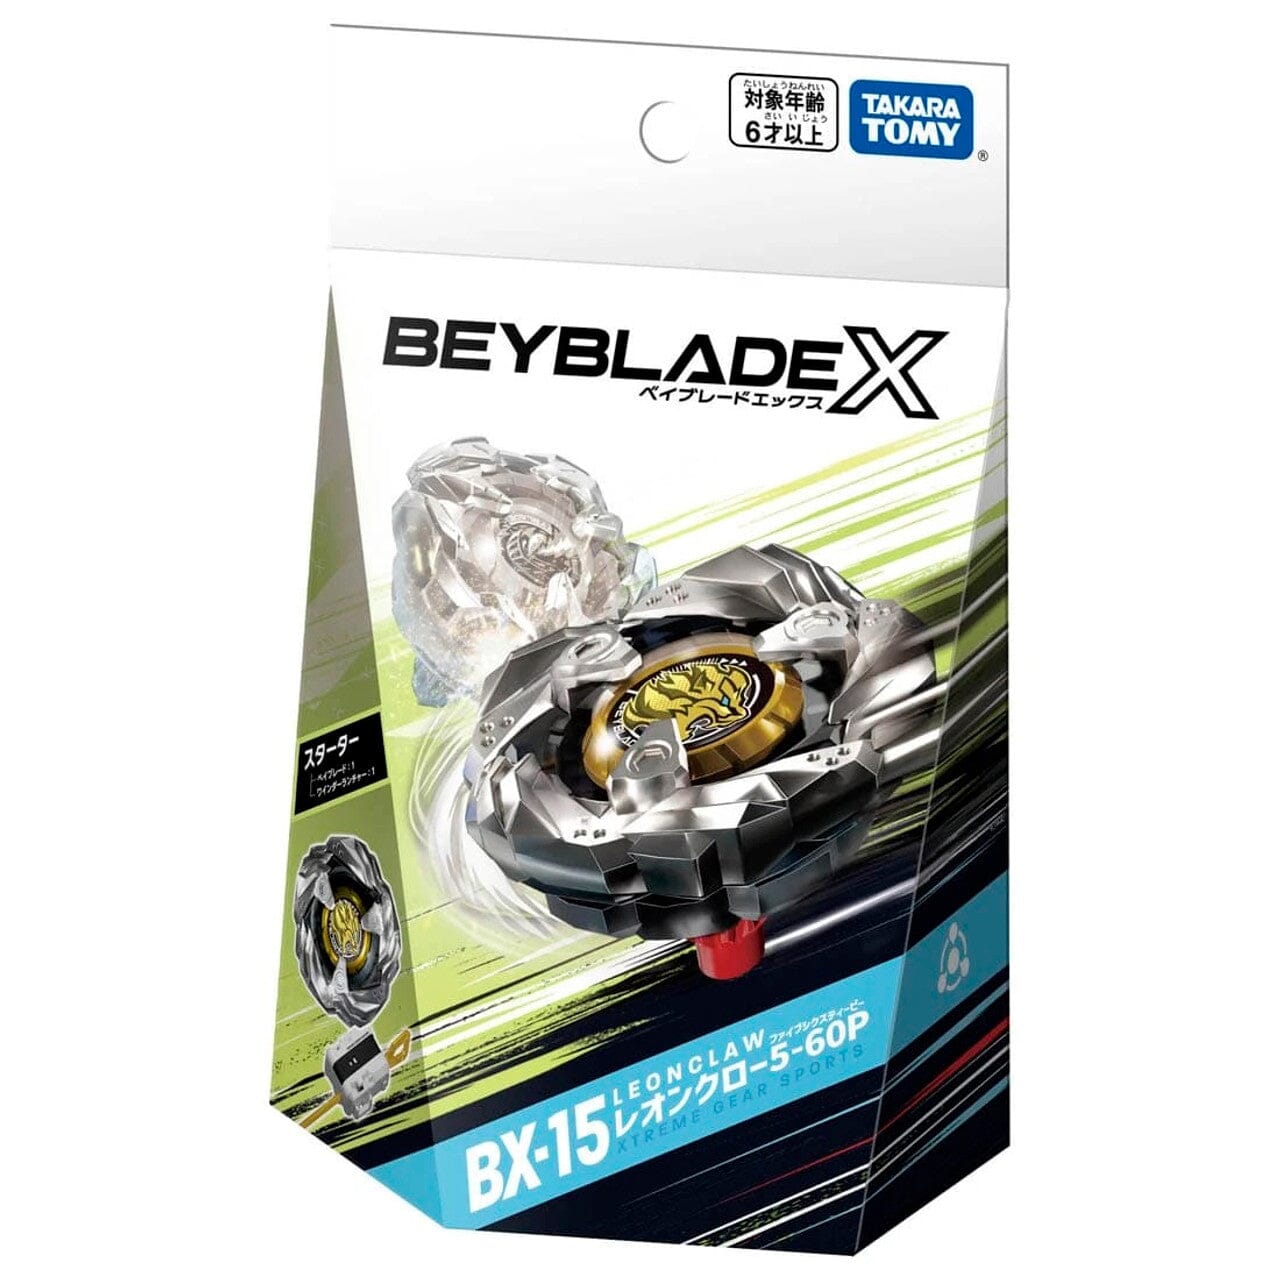 [PRE-ORDER OCT 20] Beyblade X BX-15 Starter Leon Claw 5-60P BGL Hobbies